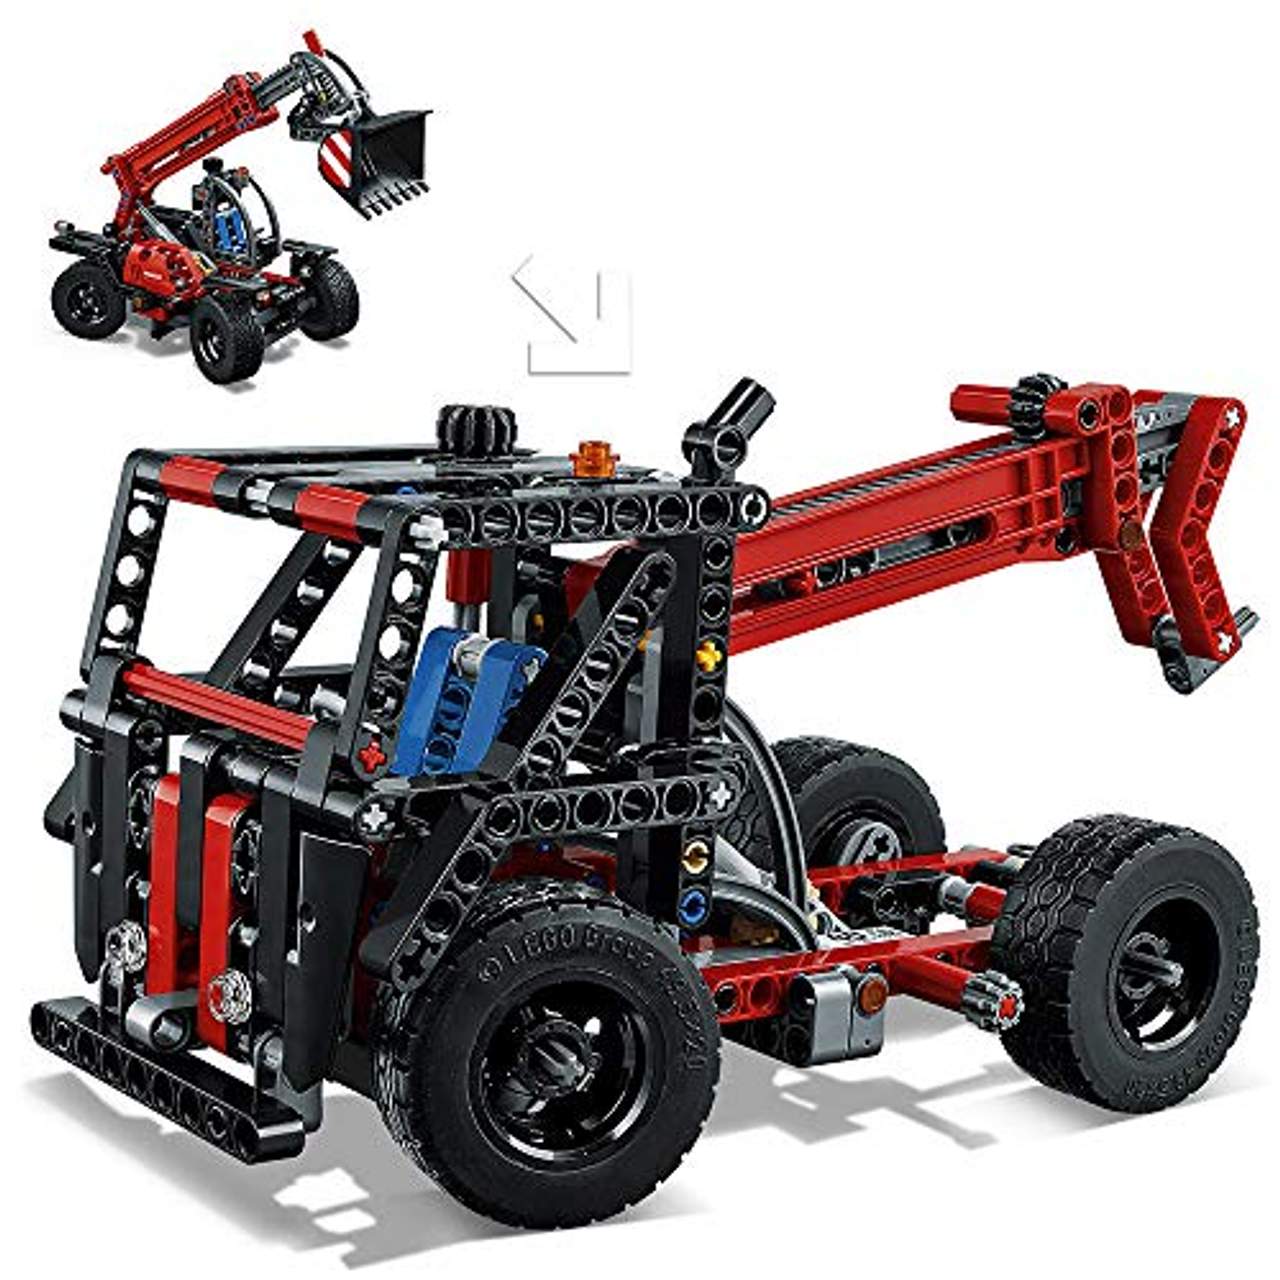 Lego Technic 42061 Teleskoplader